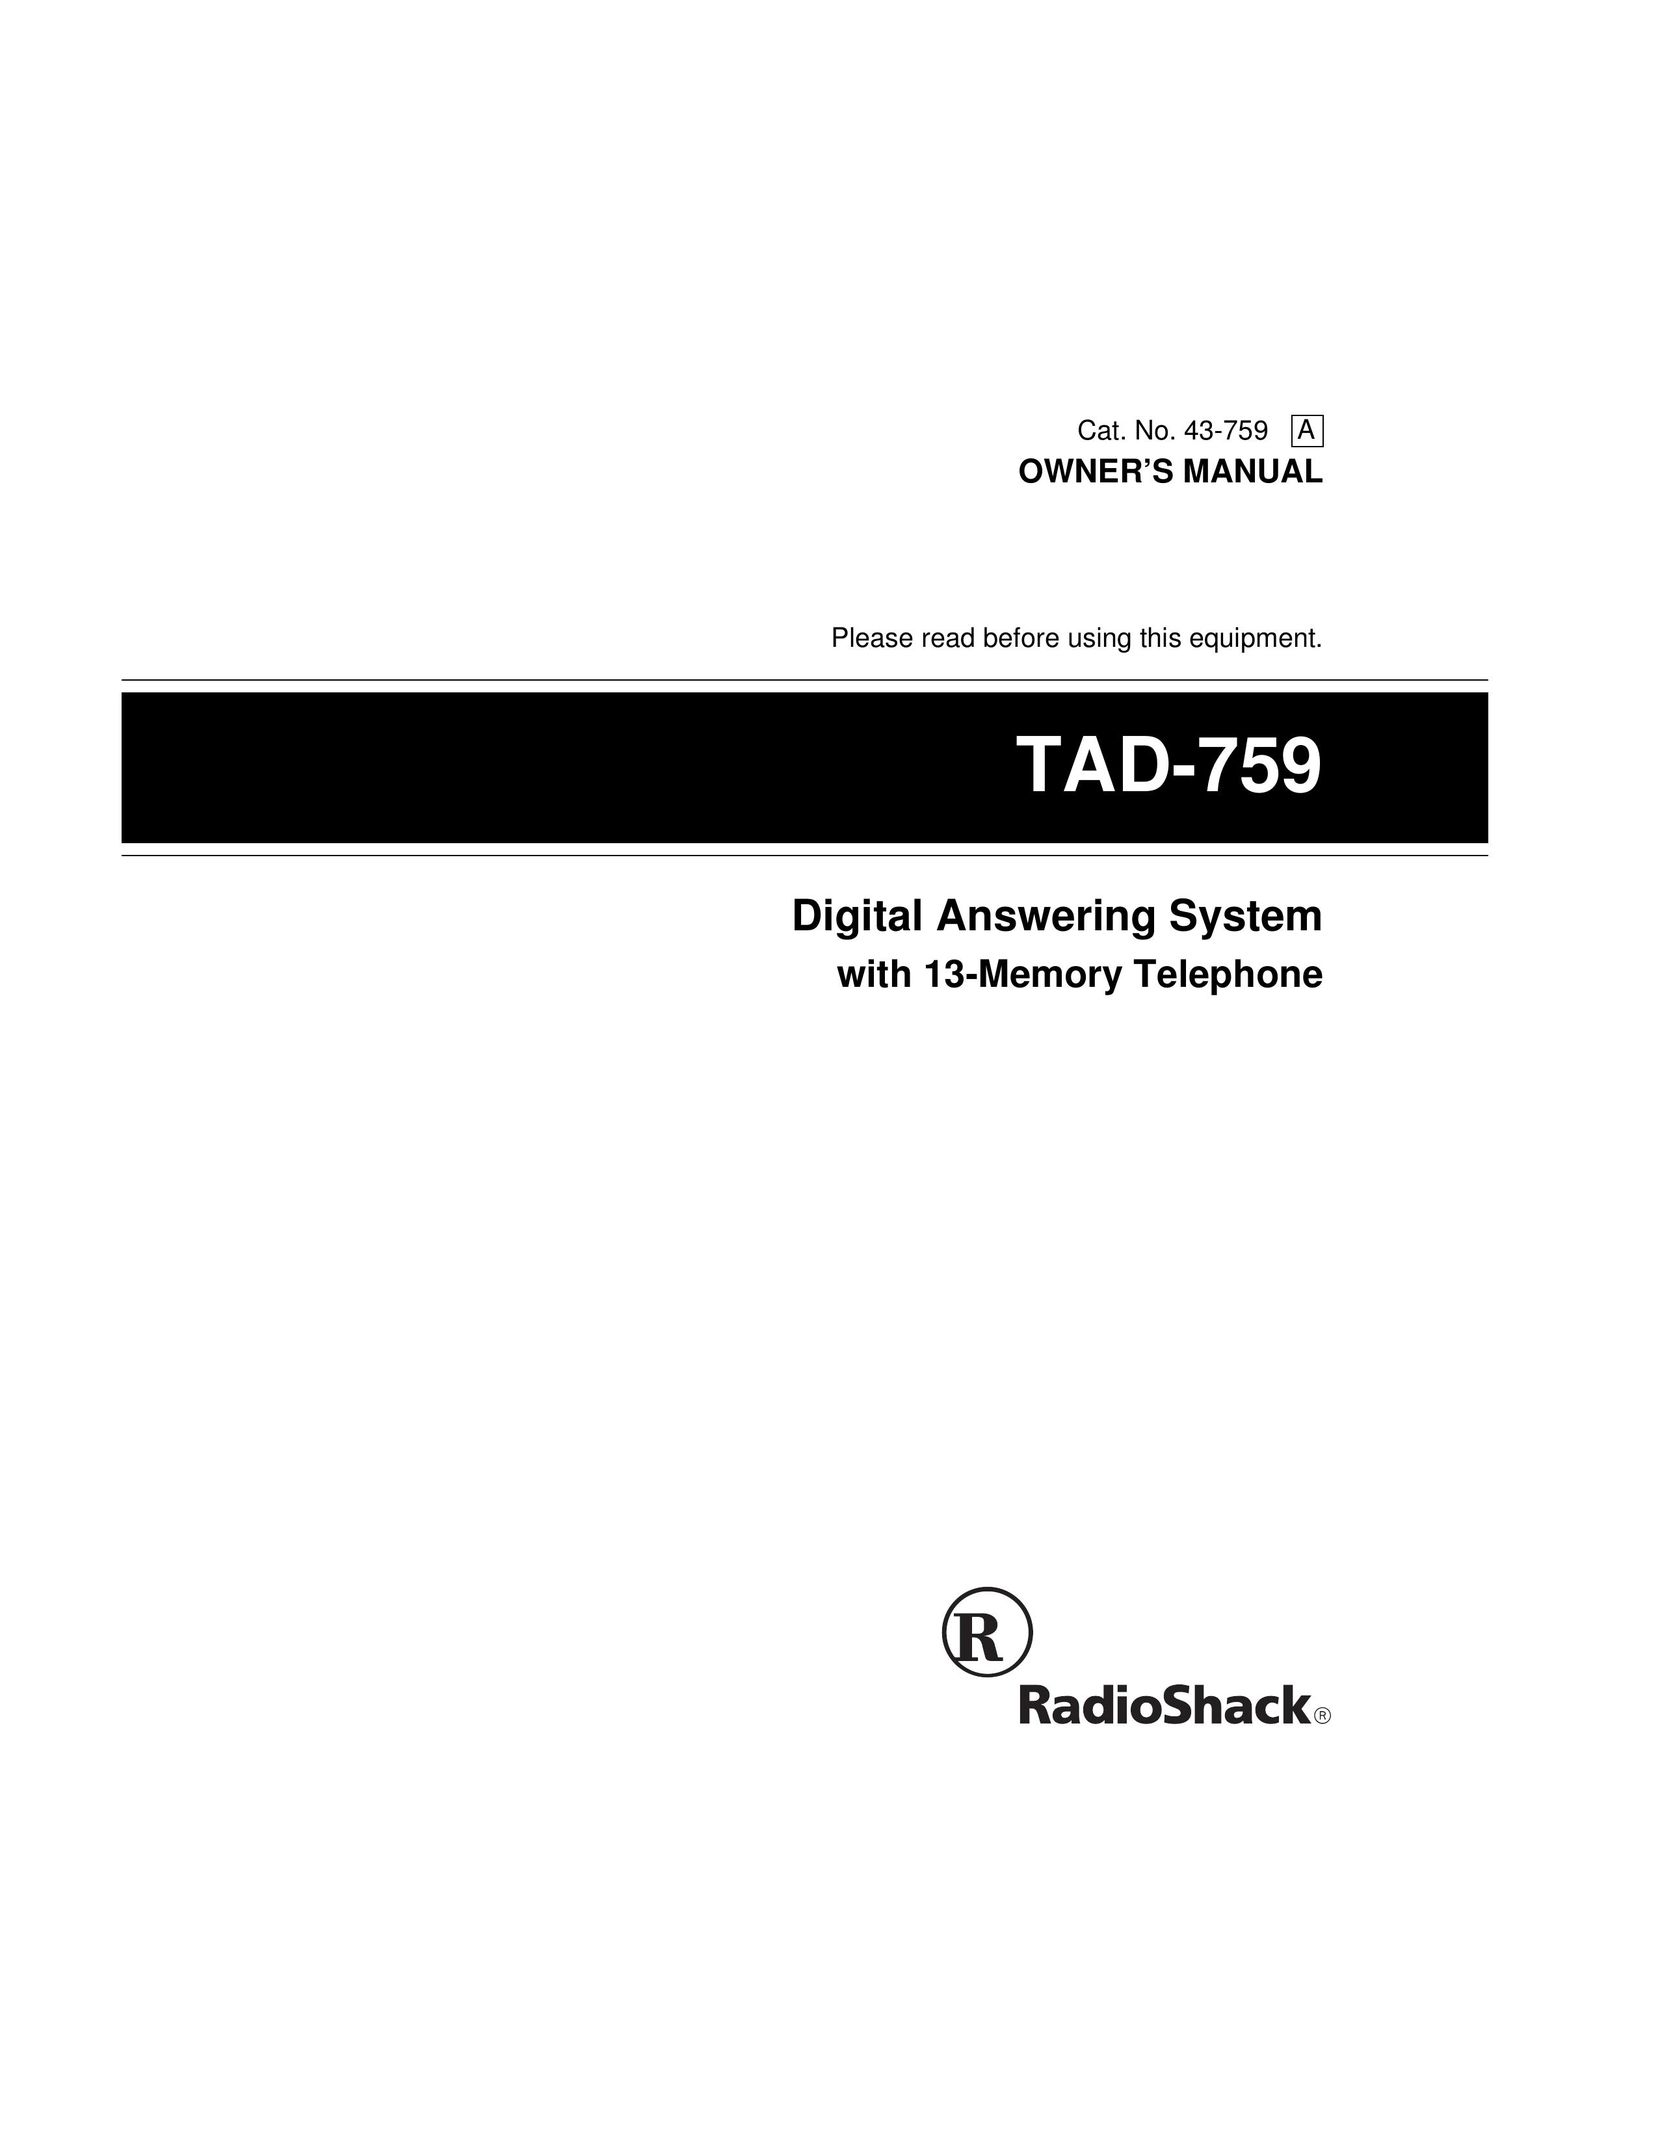 Radio Shack TAD-759 Answering Machine User Manual